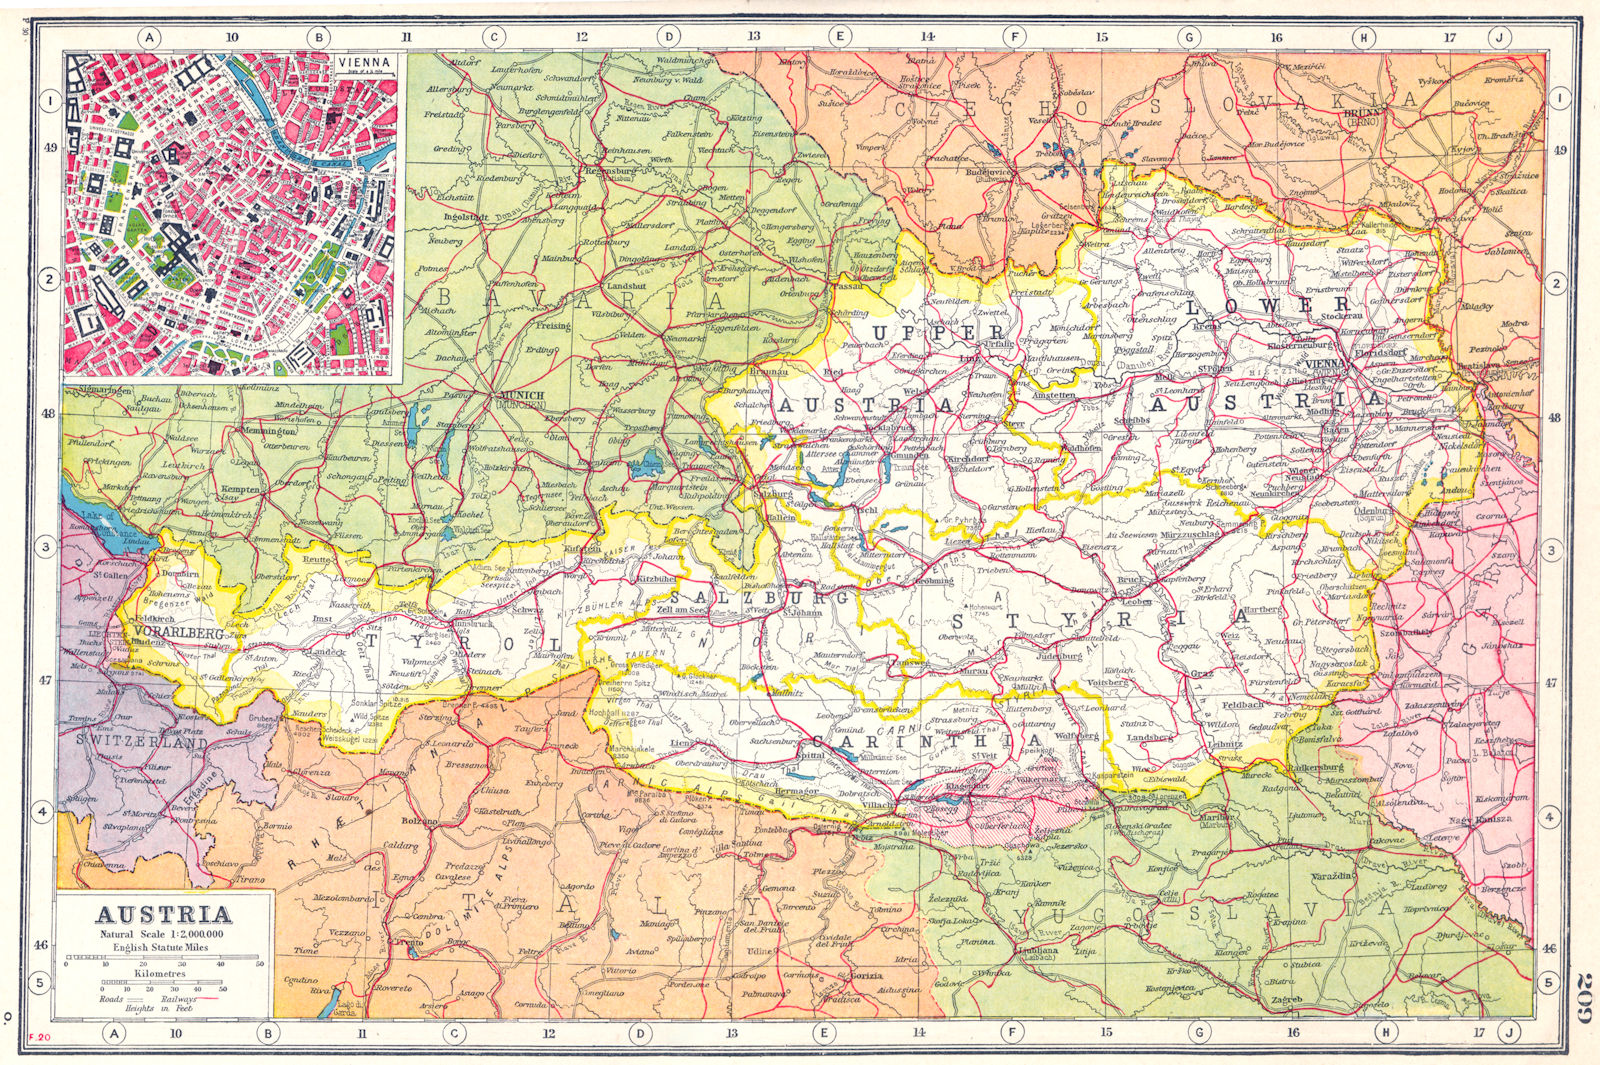 AUSTRIA. Tyrol Salzburg Styria Carinthia Vorarlberg. Inset Vienna plan 1920 map